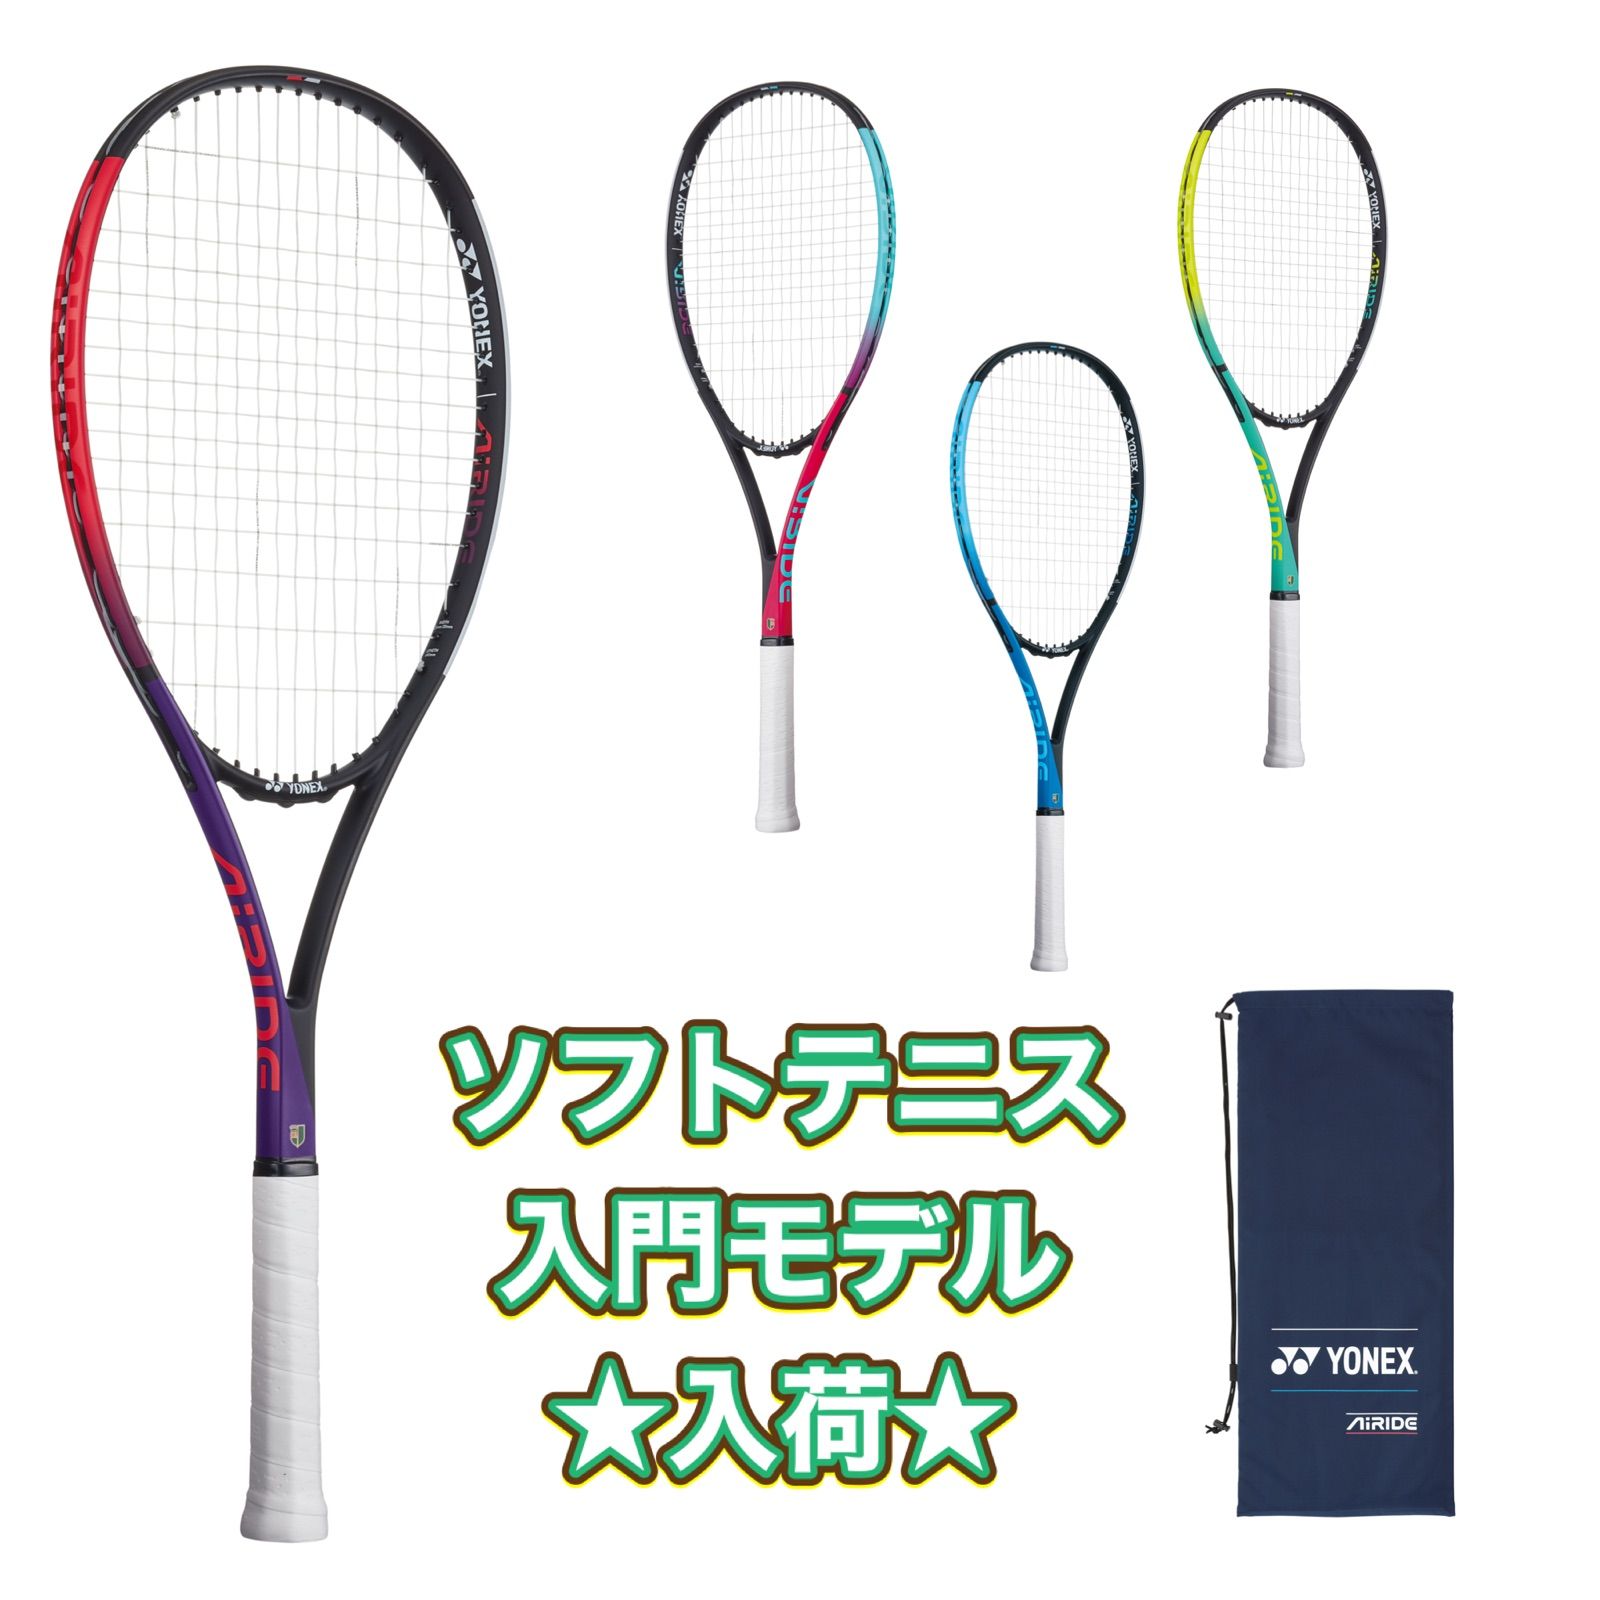 YONEX ソフトテニス ラケット 新品 - Sports - メルカリ